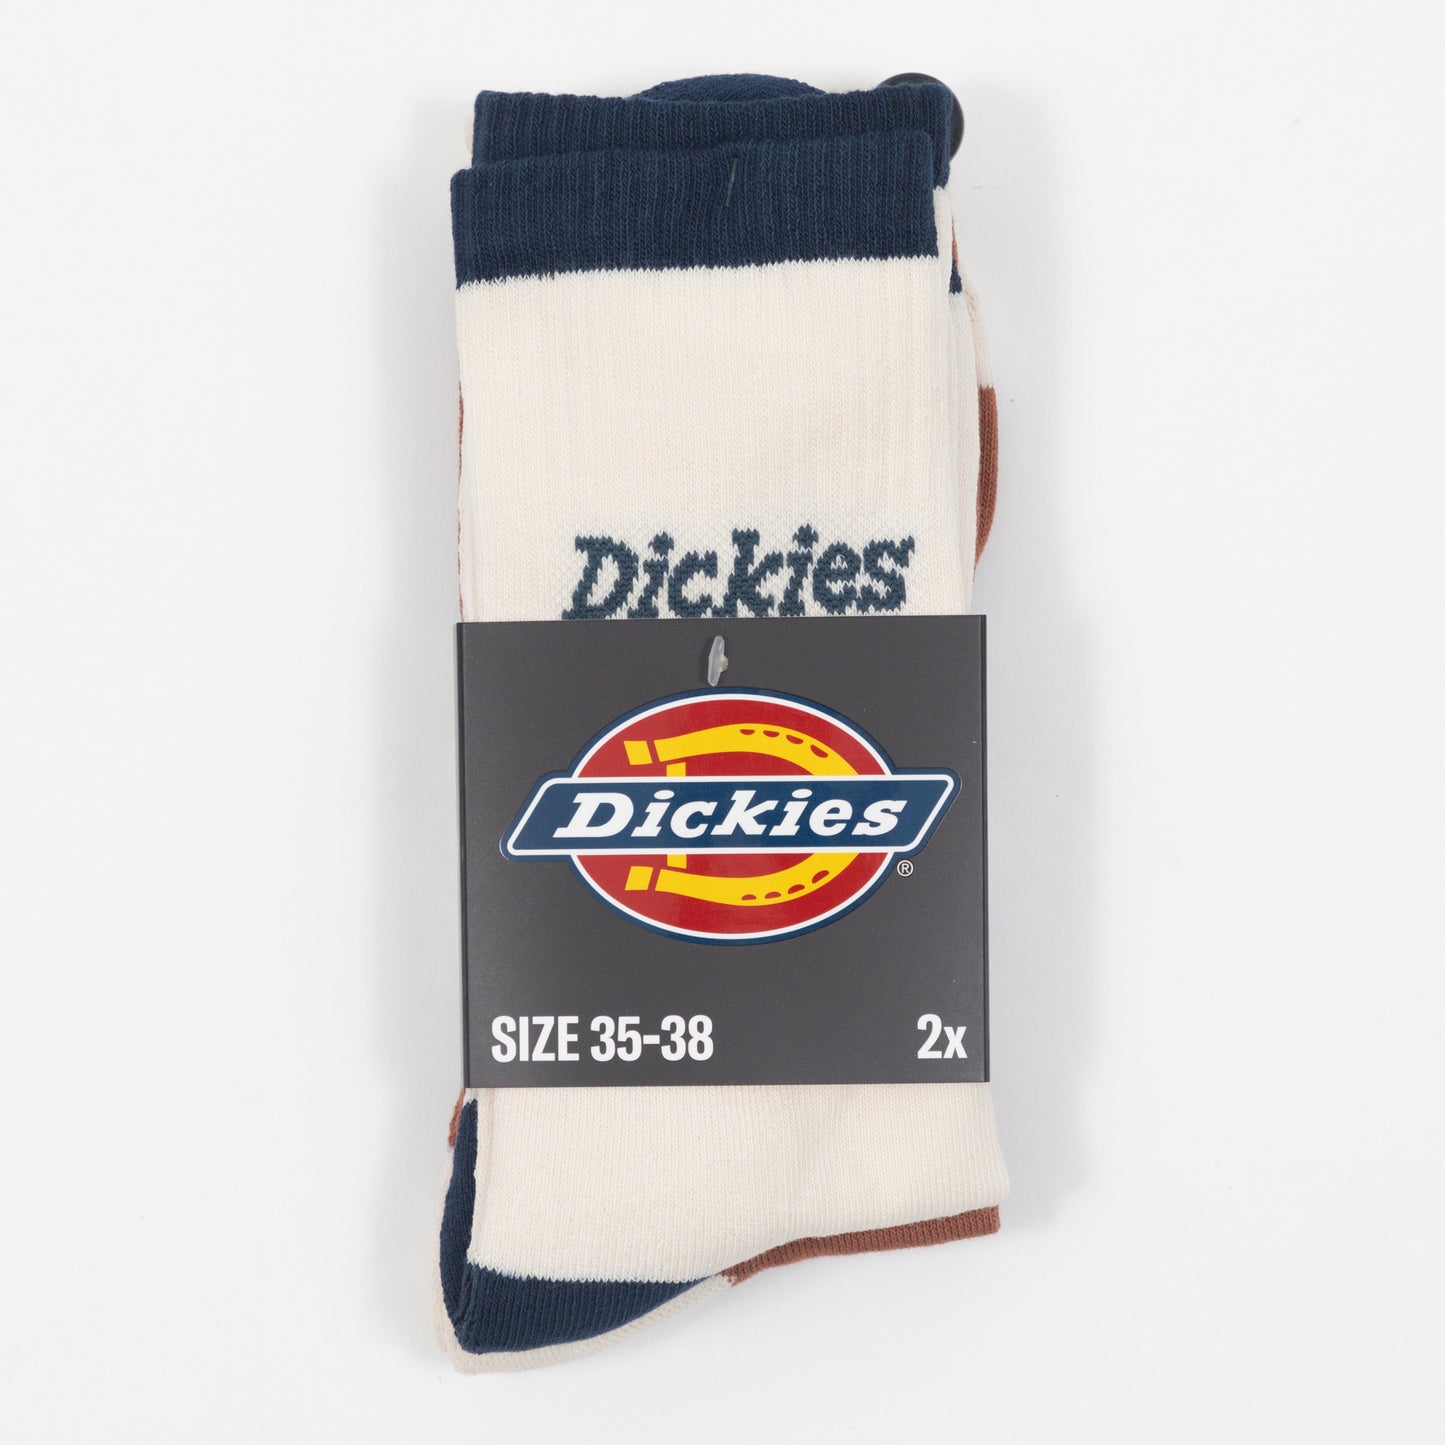 DICKIES Ness City 2 Pack Socks in CREAM & ORANGE